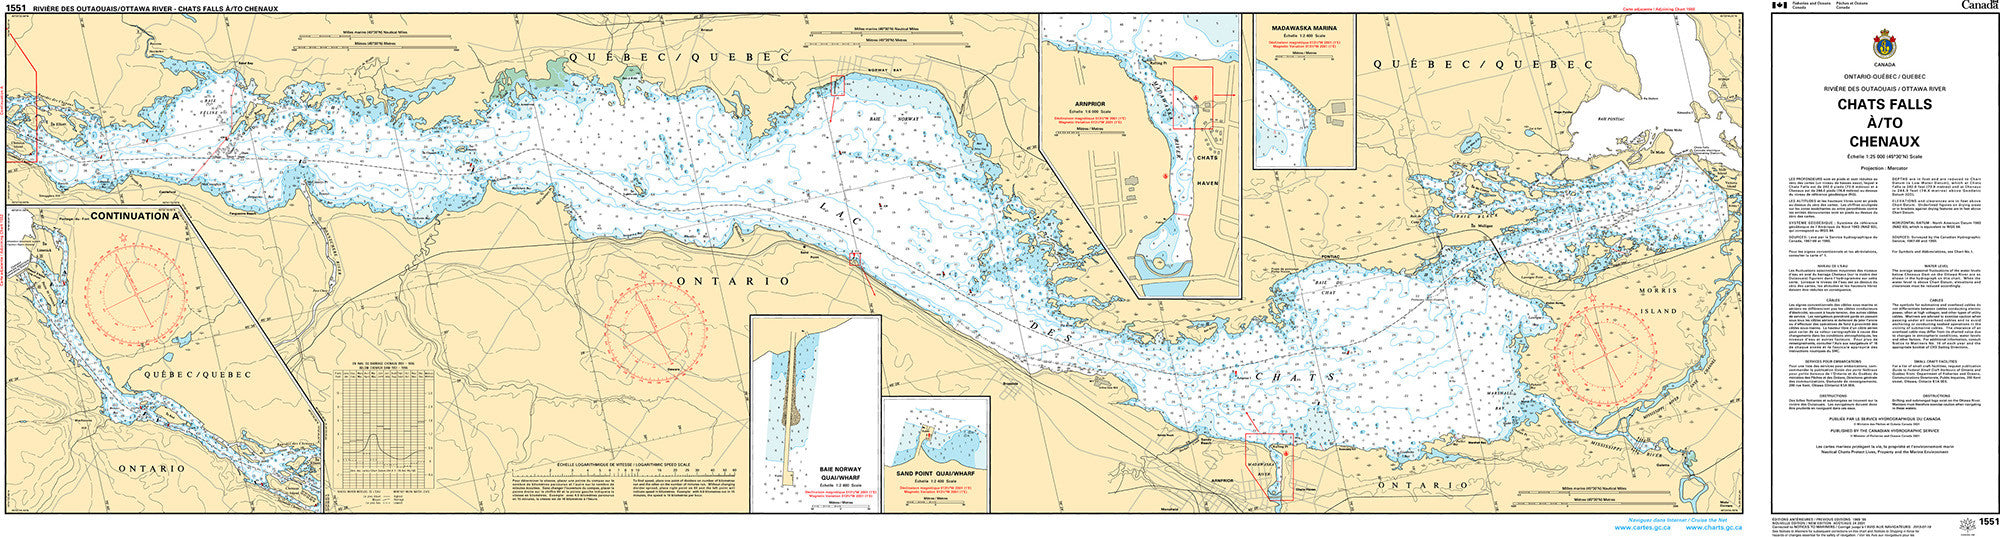 Canadian Hydrographic Service Nautical Chart CHS1551: Chats Falls à/to Chenaux